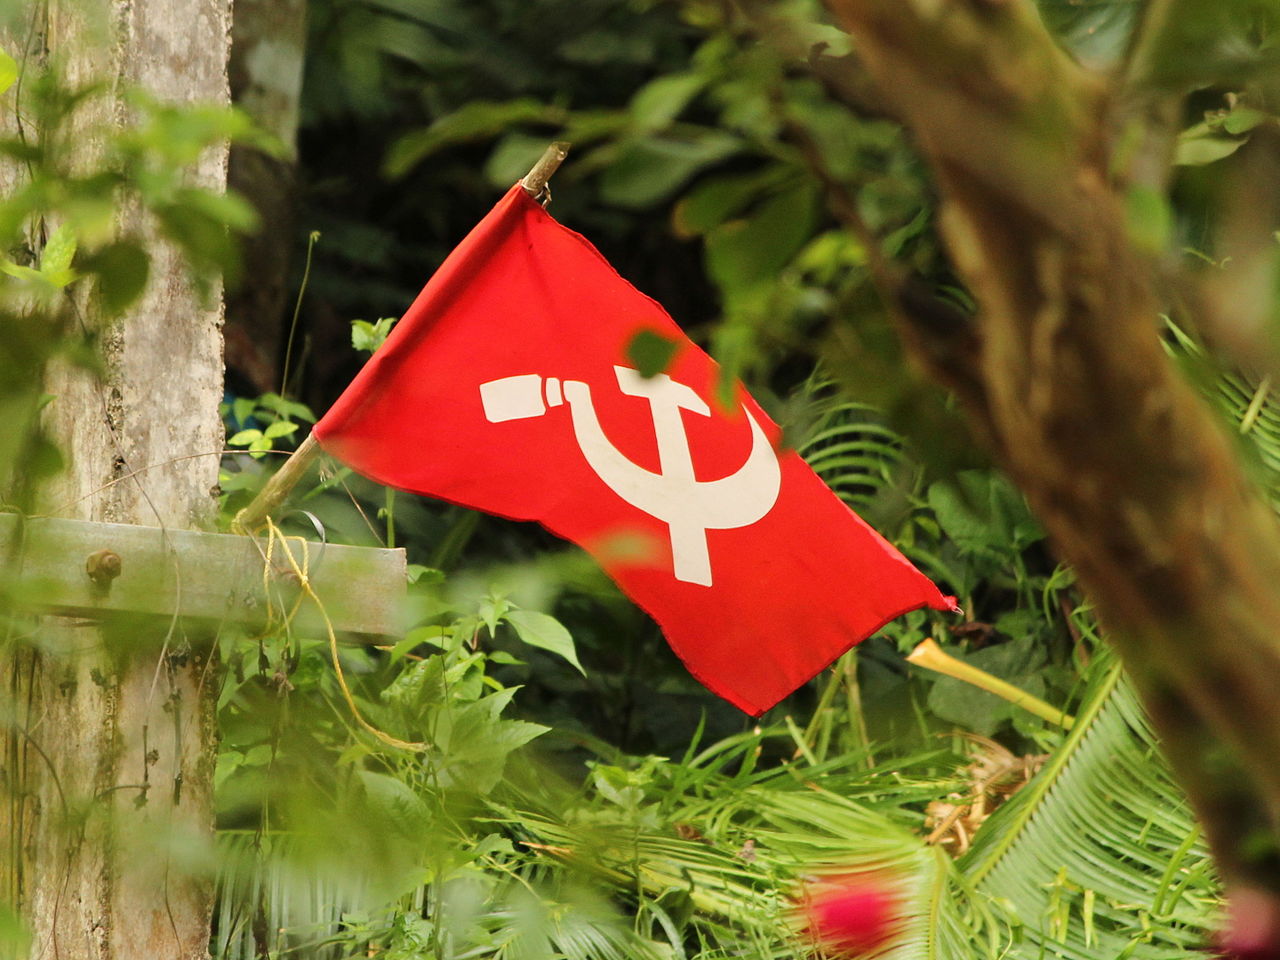 Communist flag Kottayam Kerala India Image Praveenp